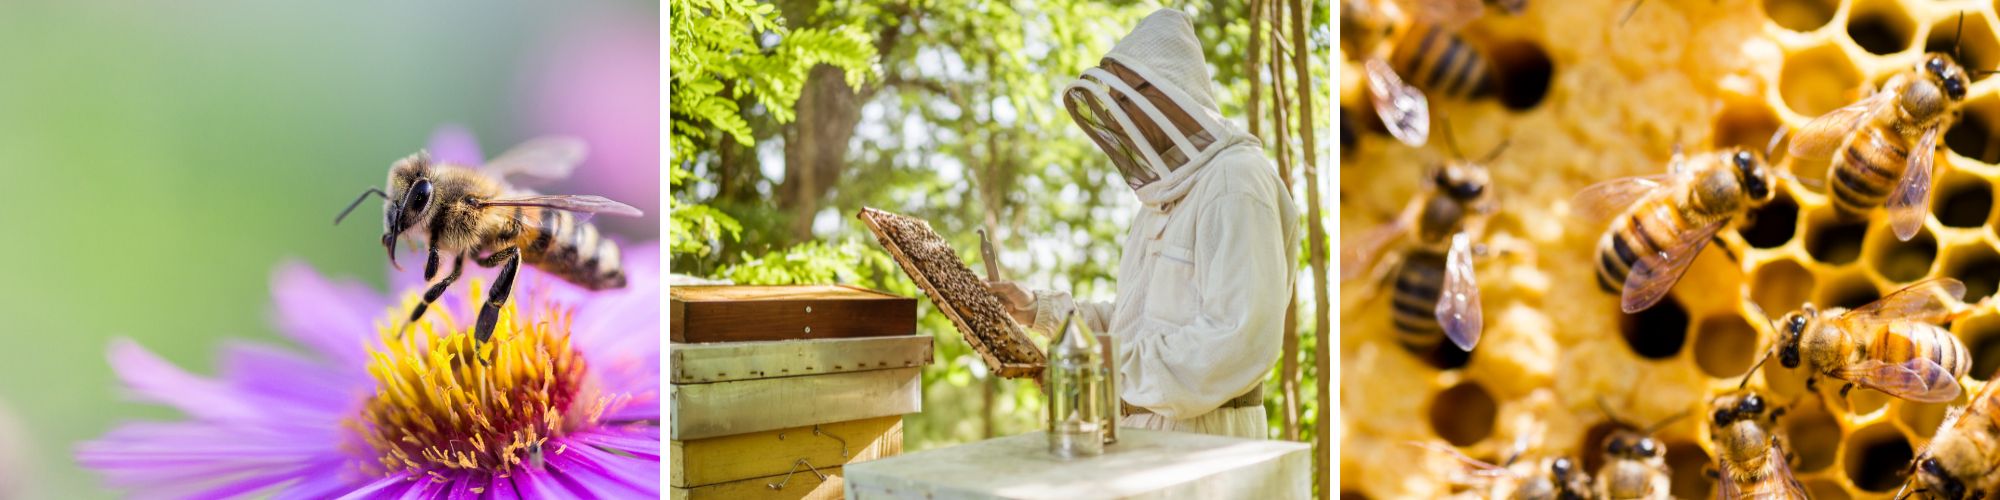 Beekeeping Collage